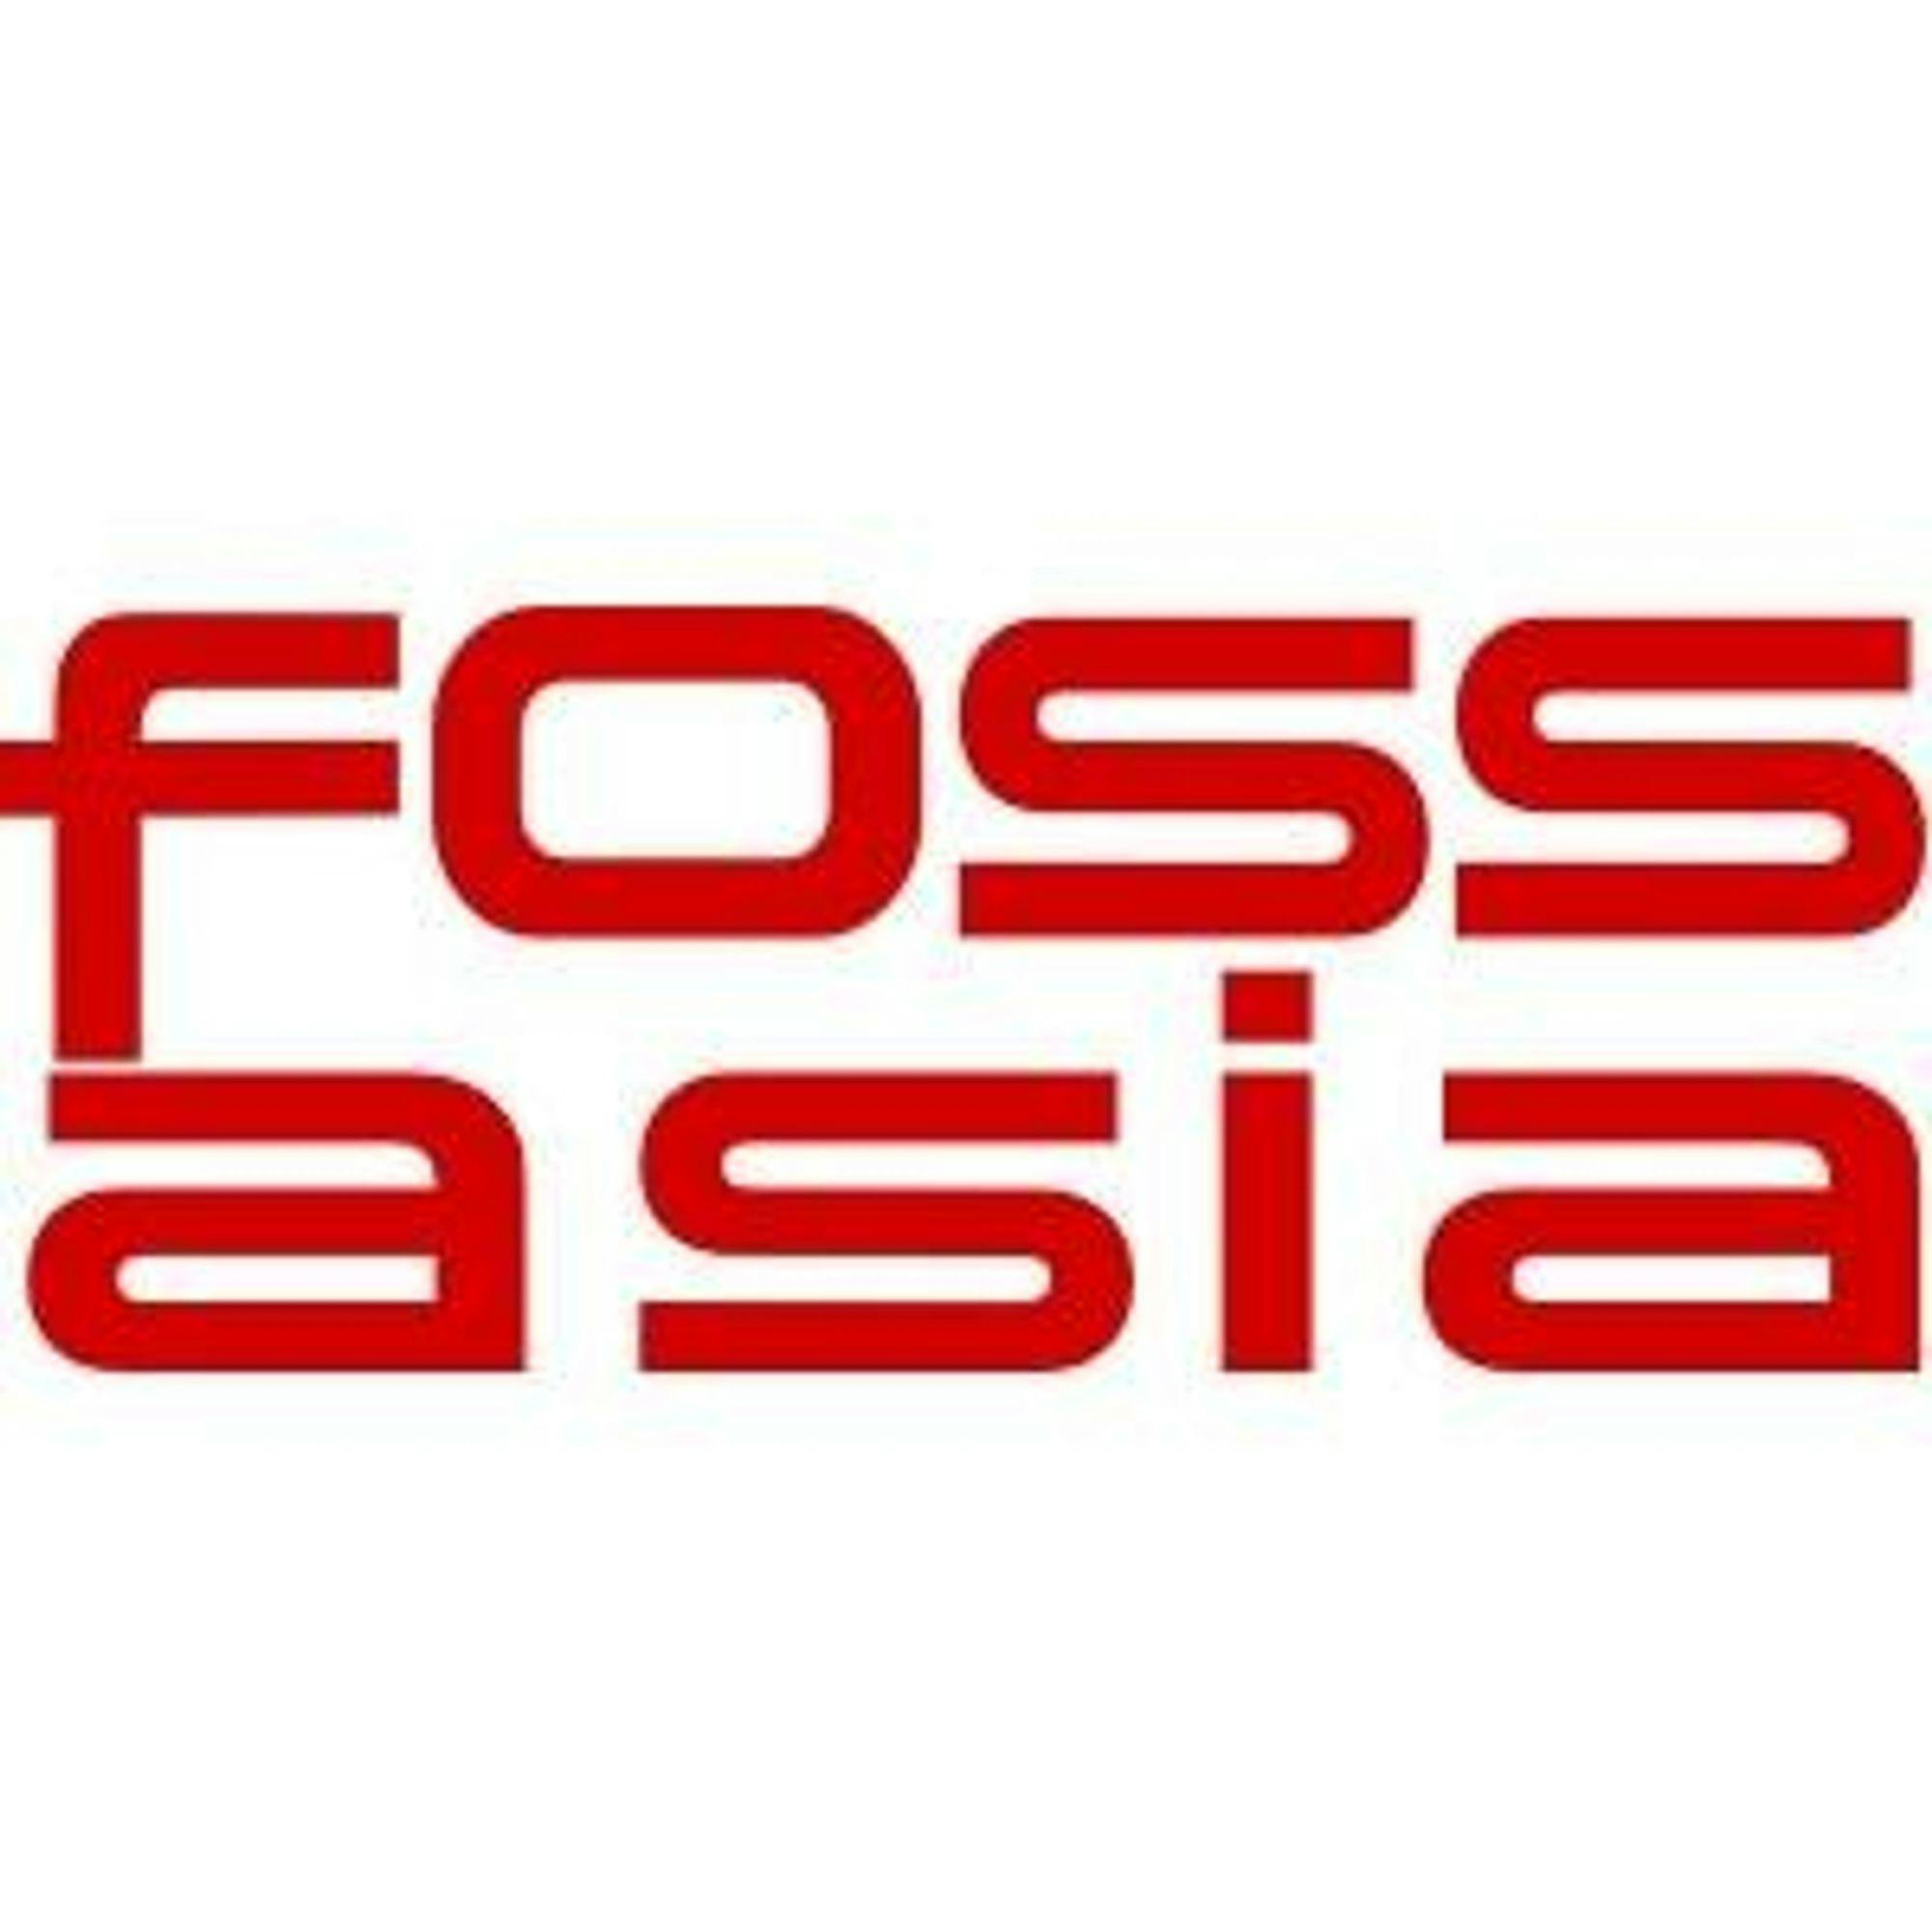 fossasia/loklak_search